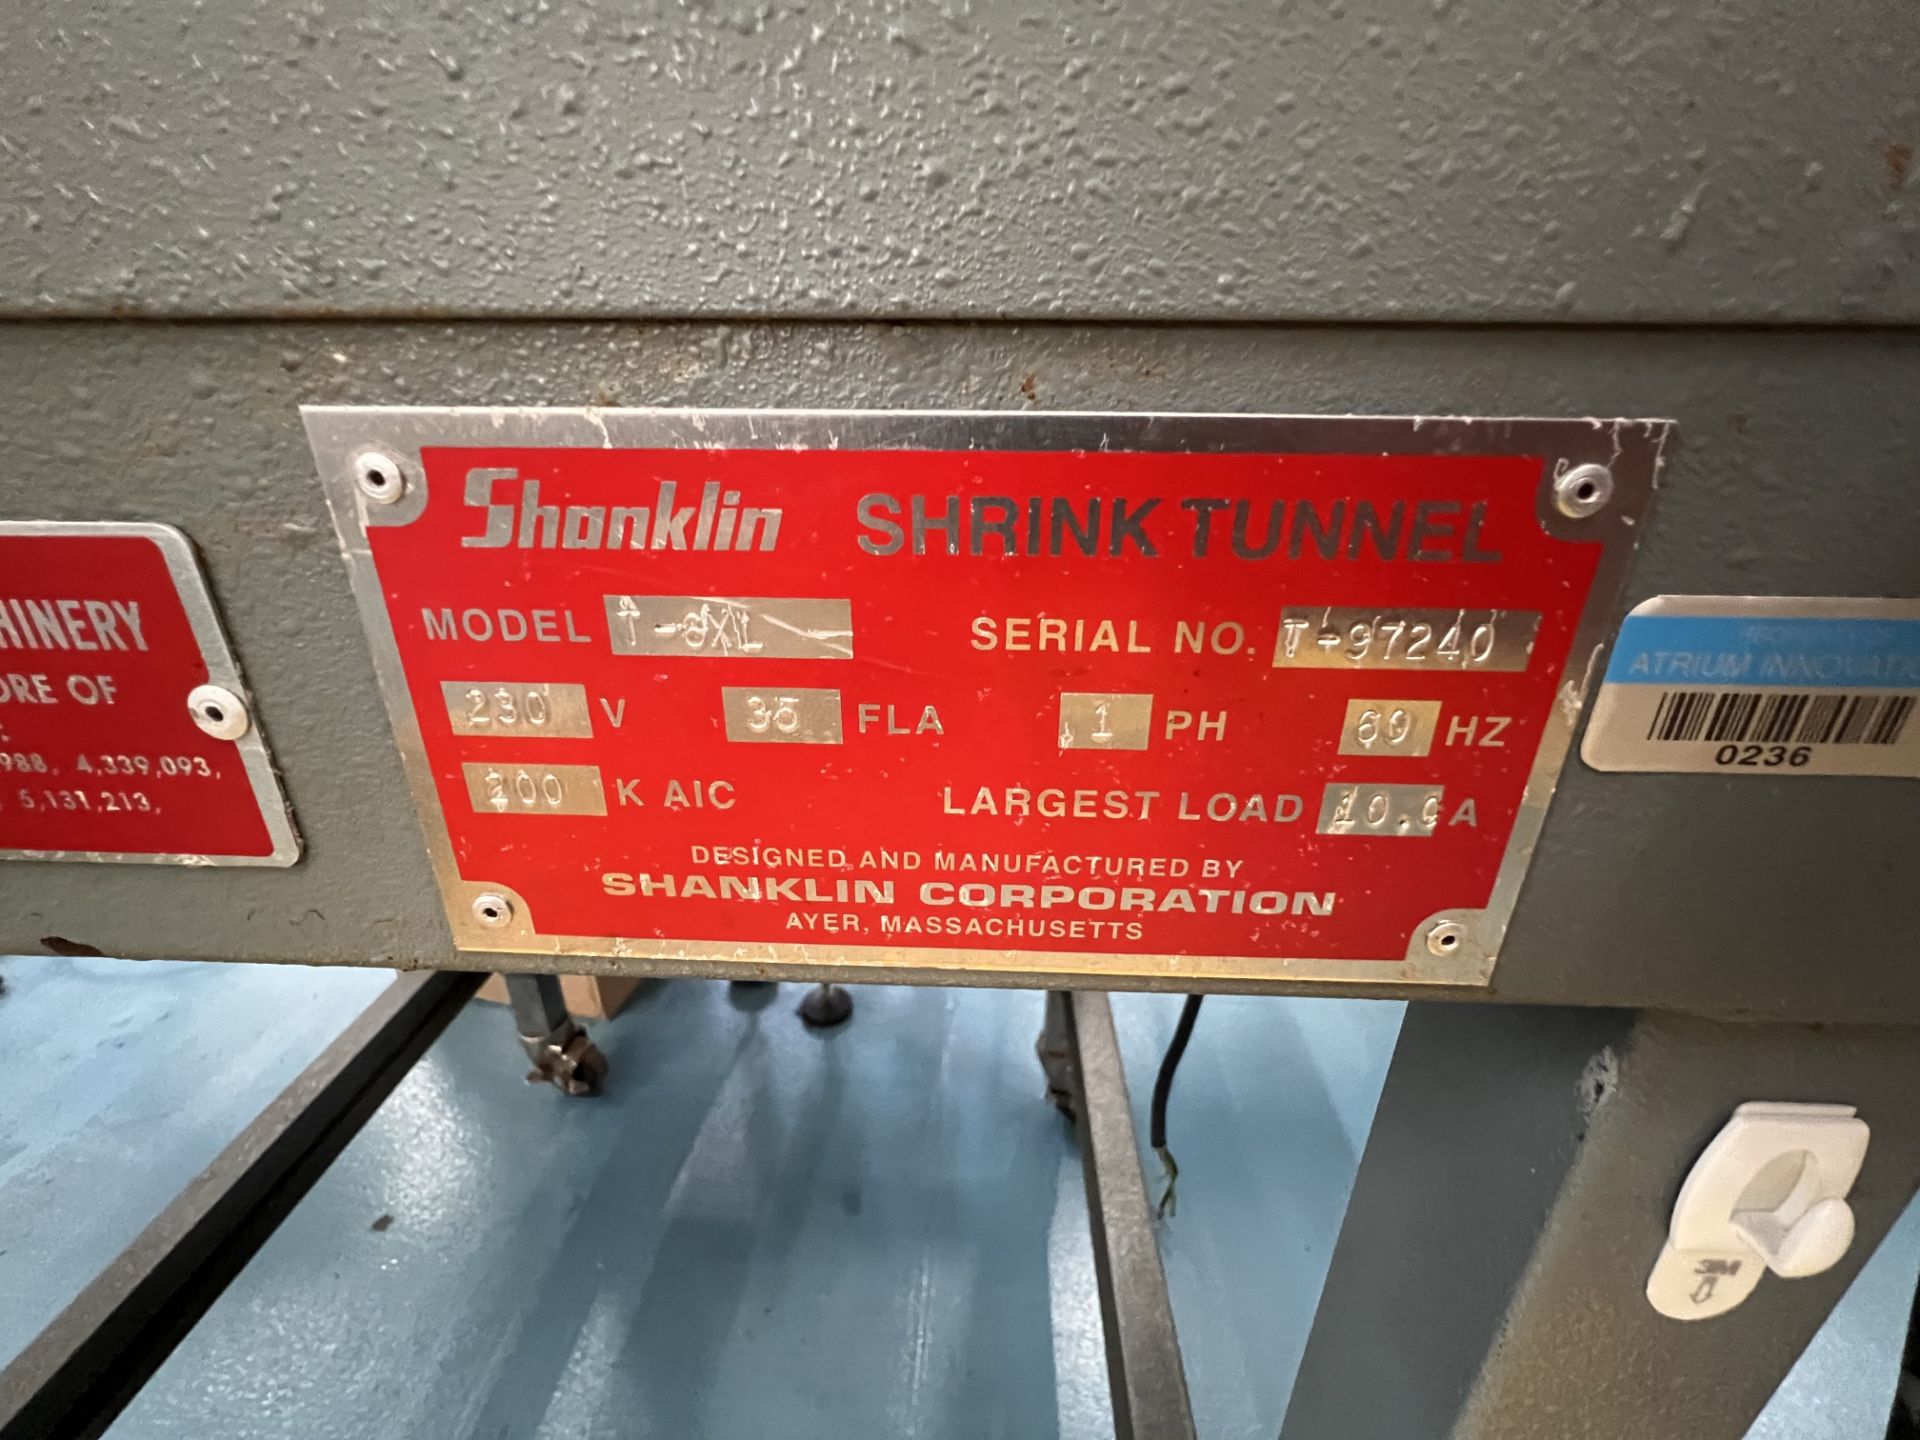 SHANKLIN CONVEYORIZED HEAT SHRINK TUNNEL, MODEL T-6XL, S/N T-97240, 1-PHASE - Image 3 of 8